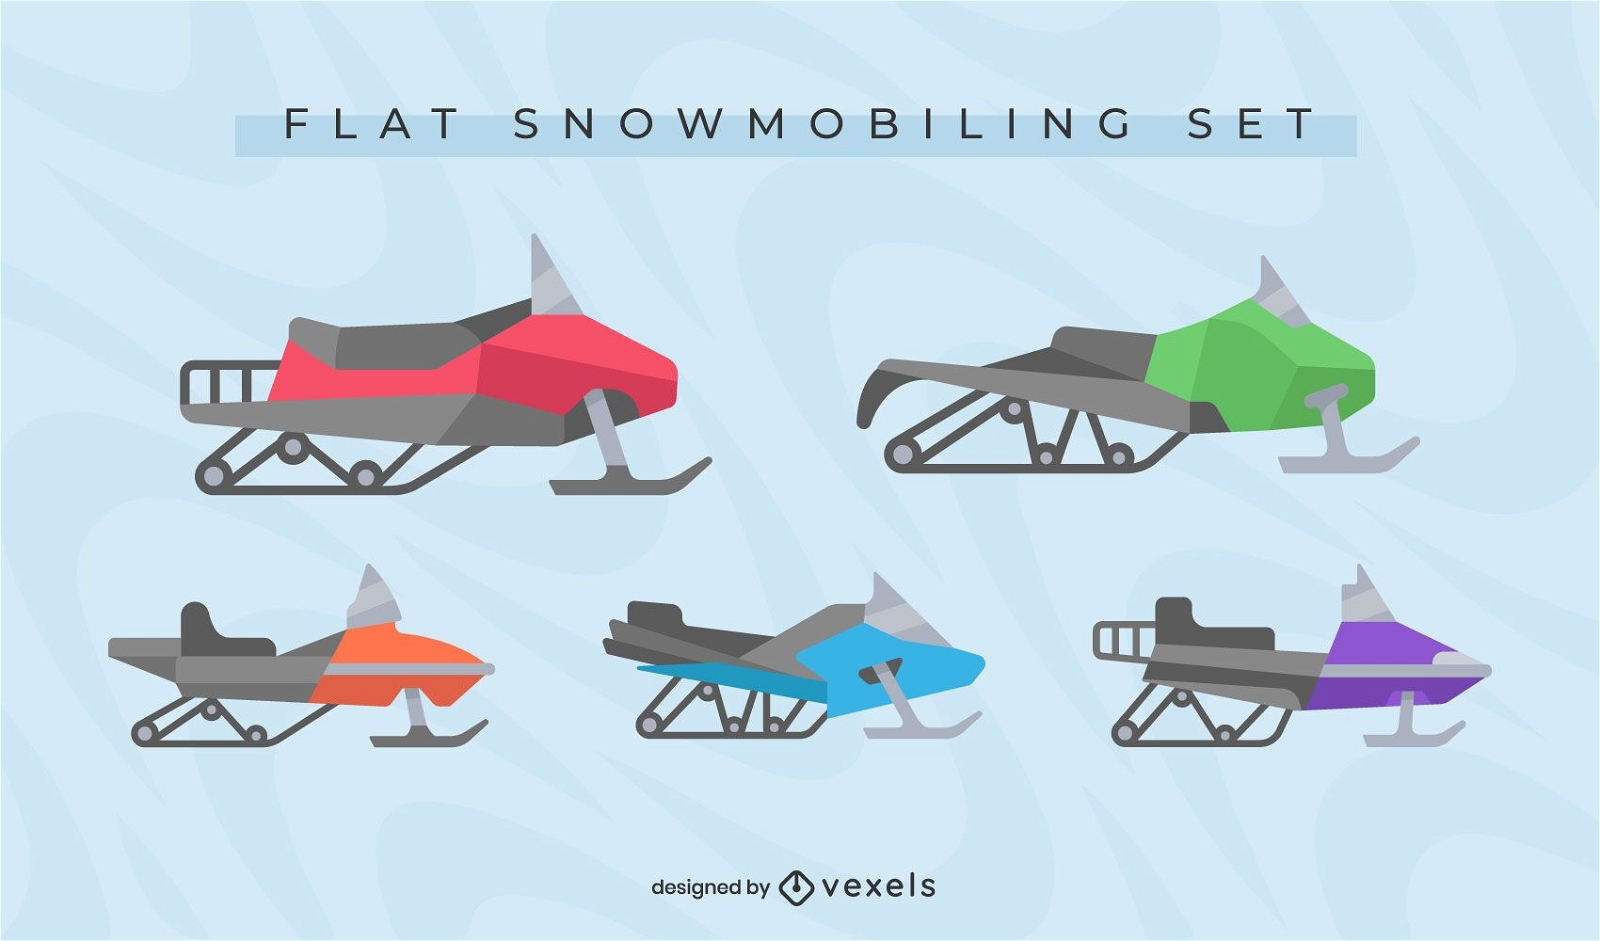 Flat snowmobiling design set